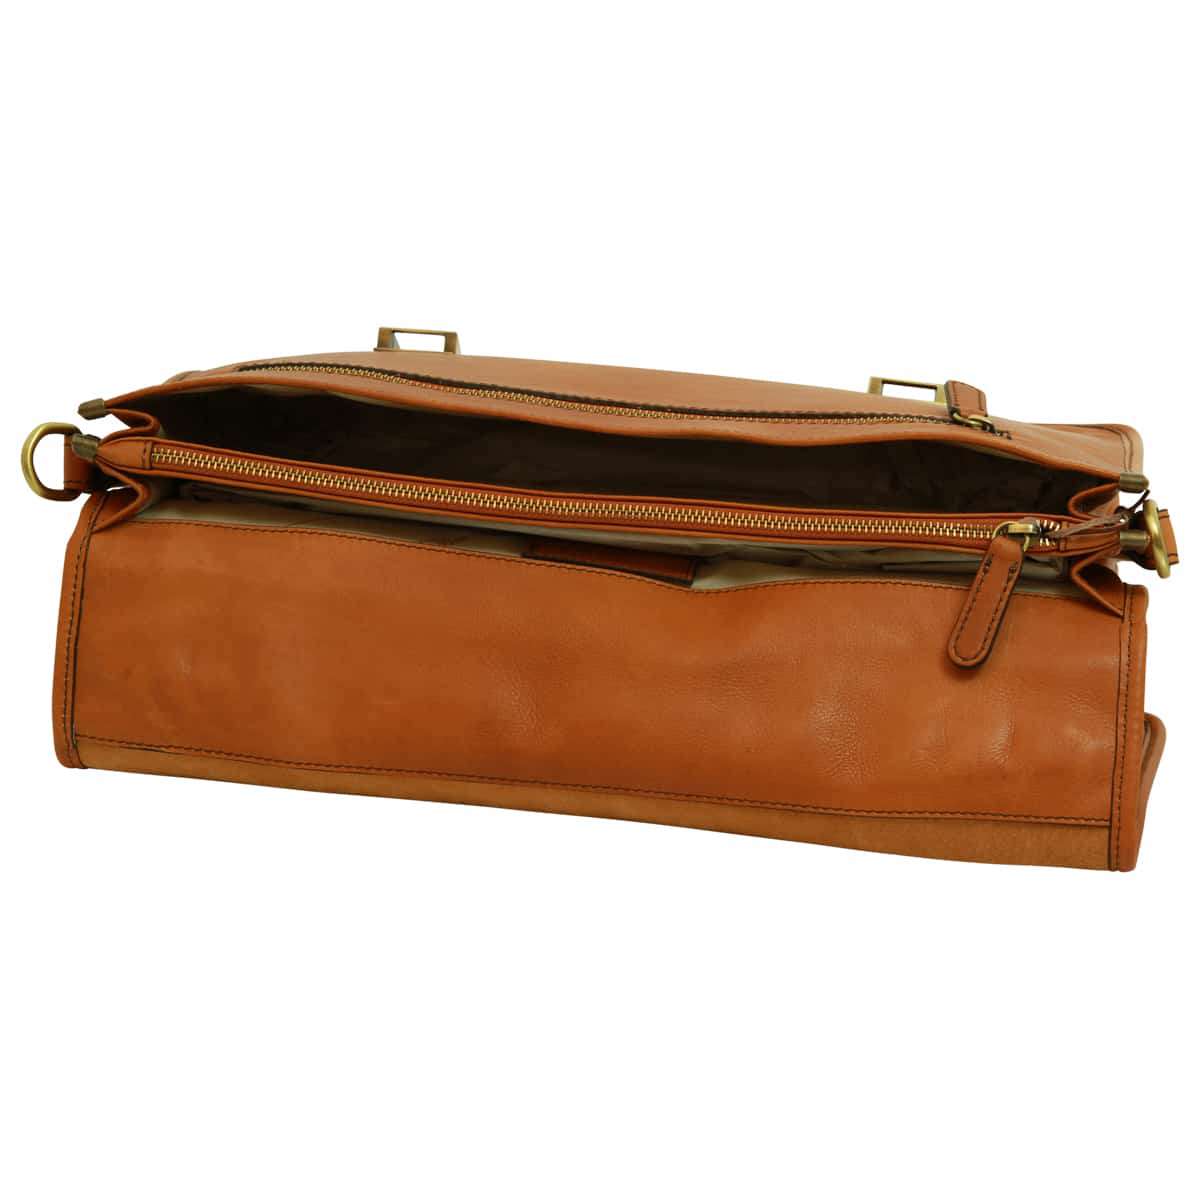 Soft Calfskin Leather Briefcase with shoulder strap - Gold | 030991CO US | Old Angler Firenze